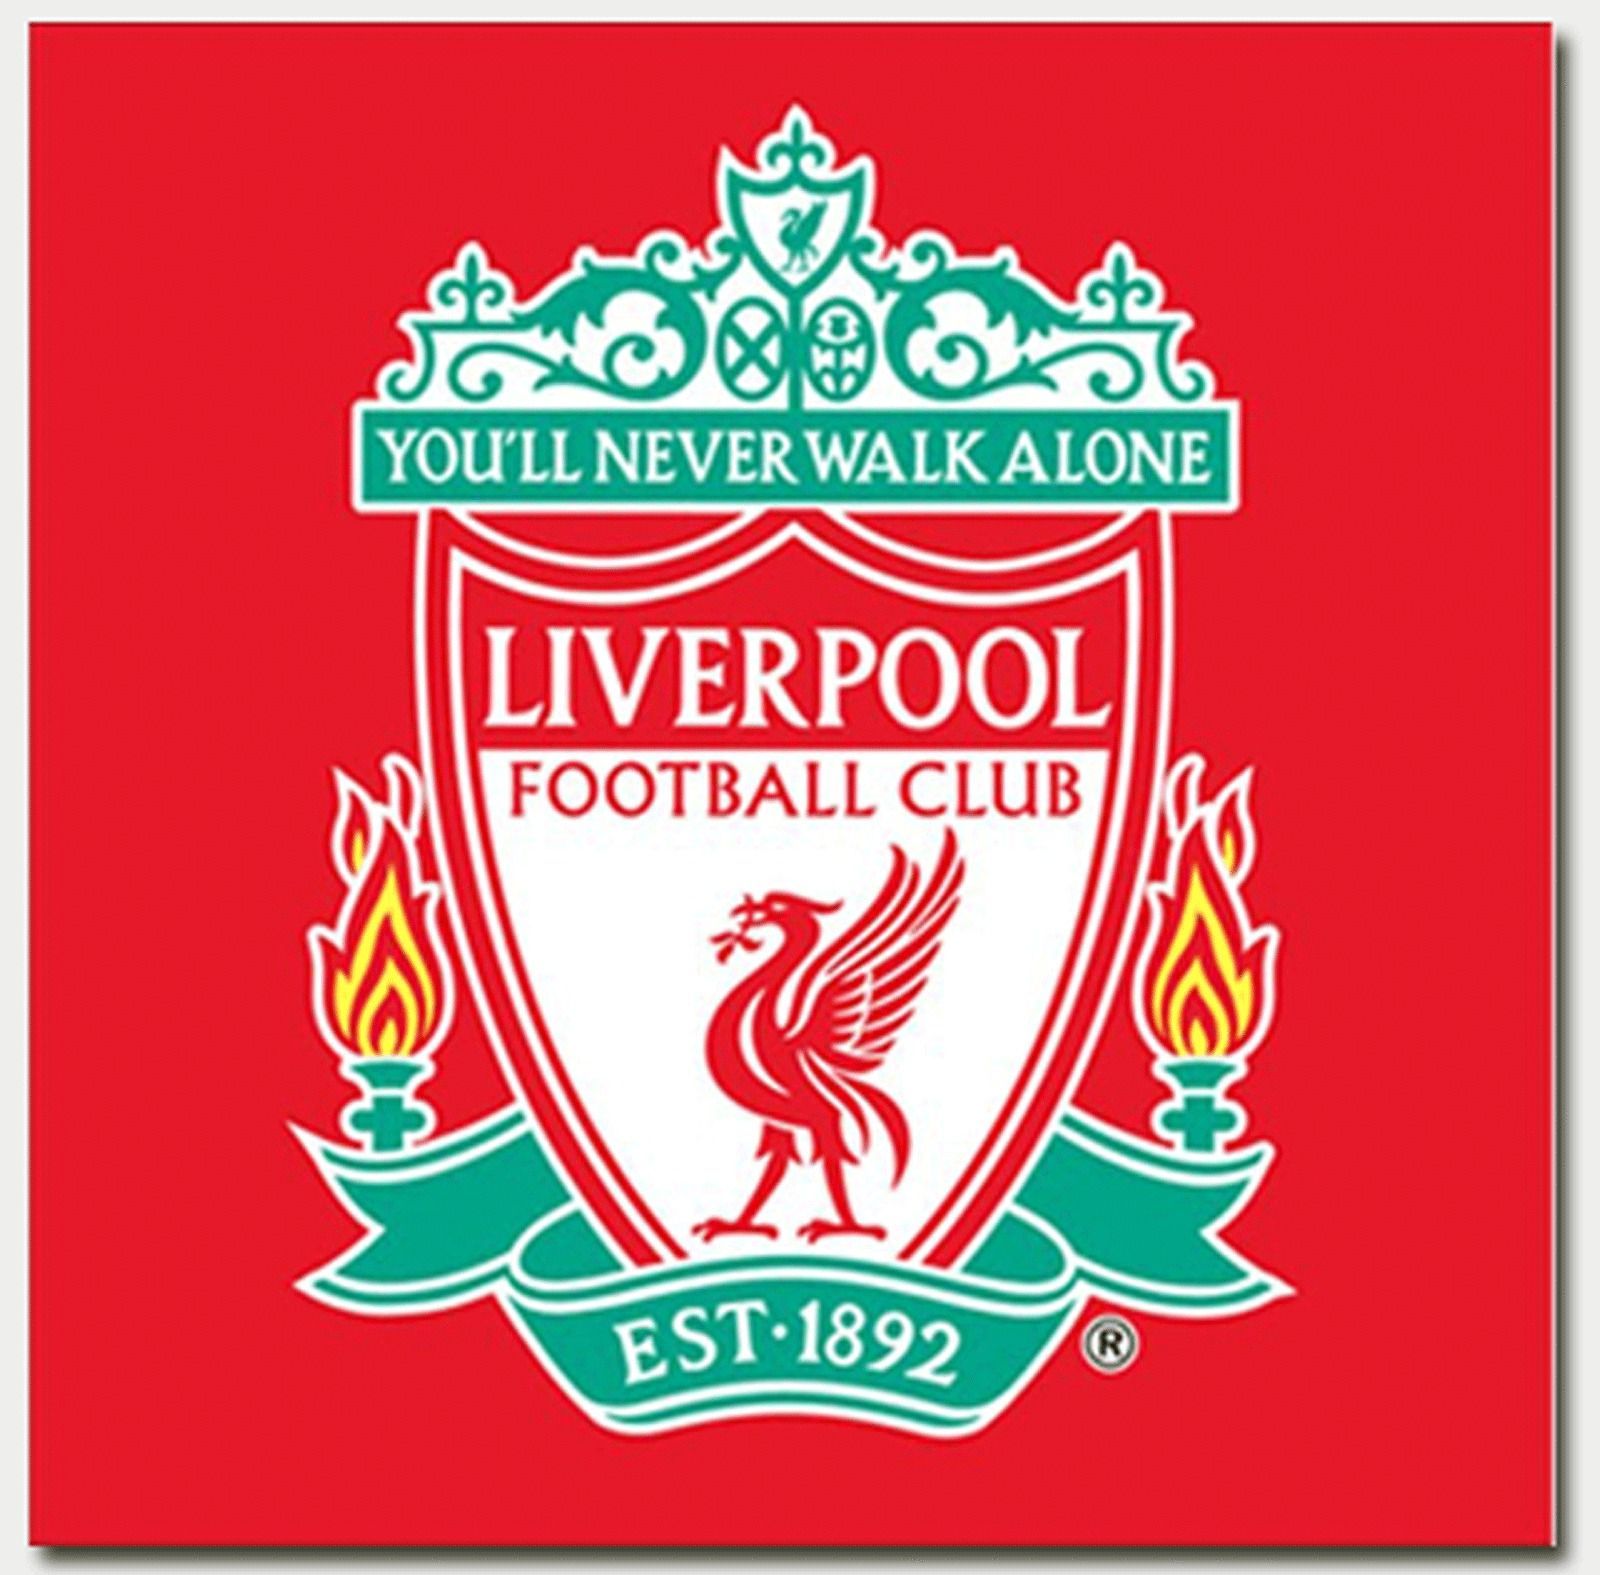 Next game Liverpool :(